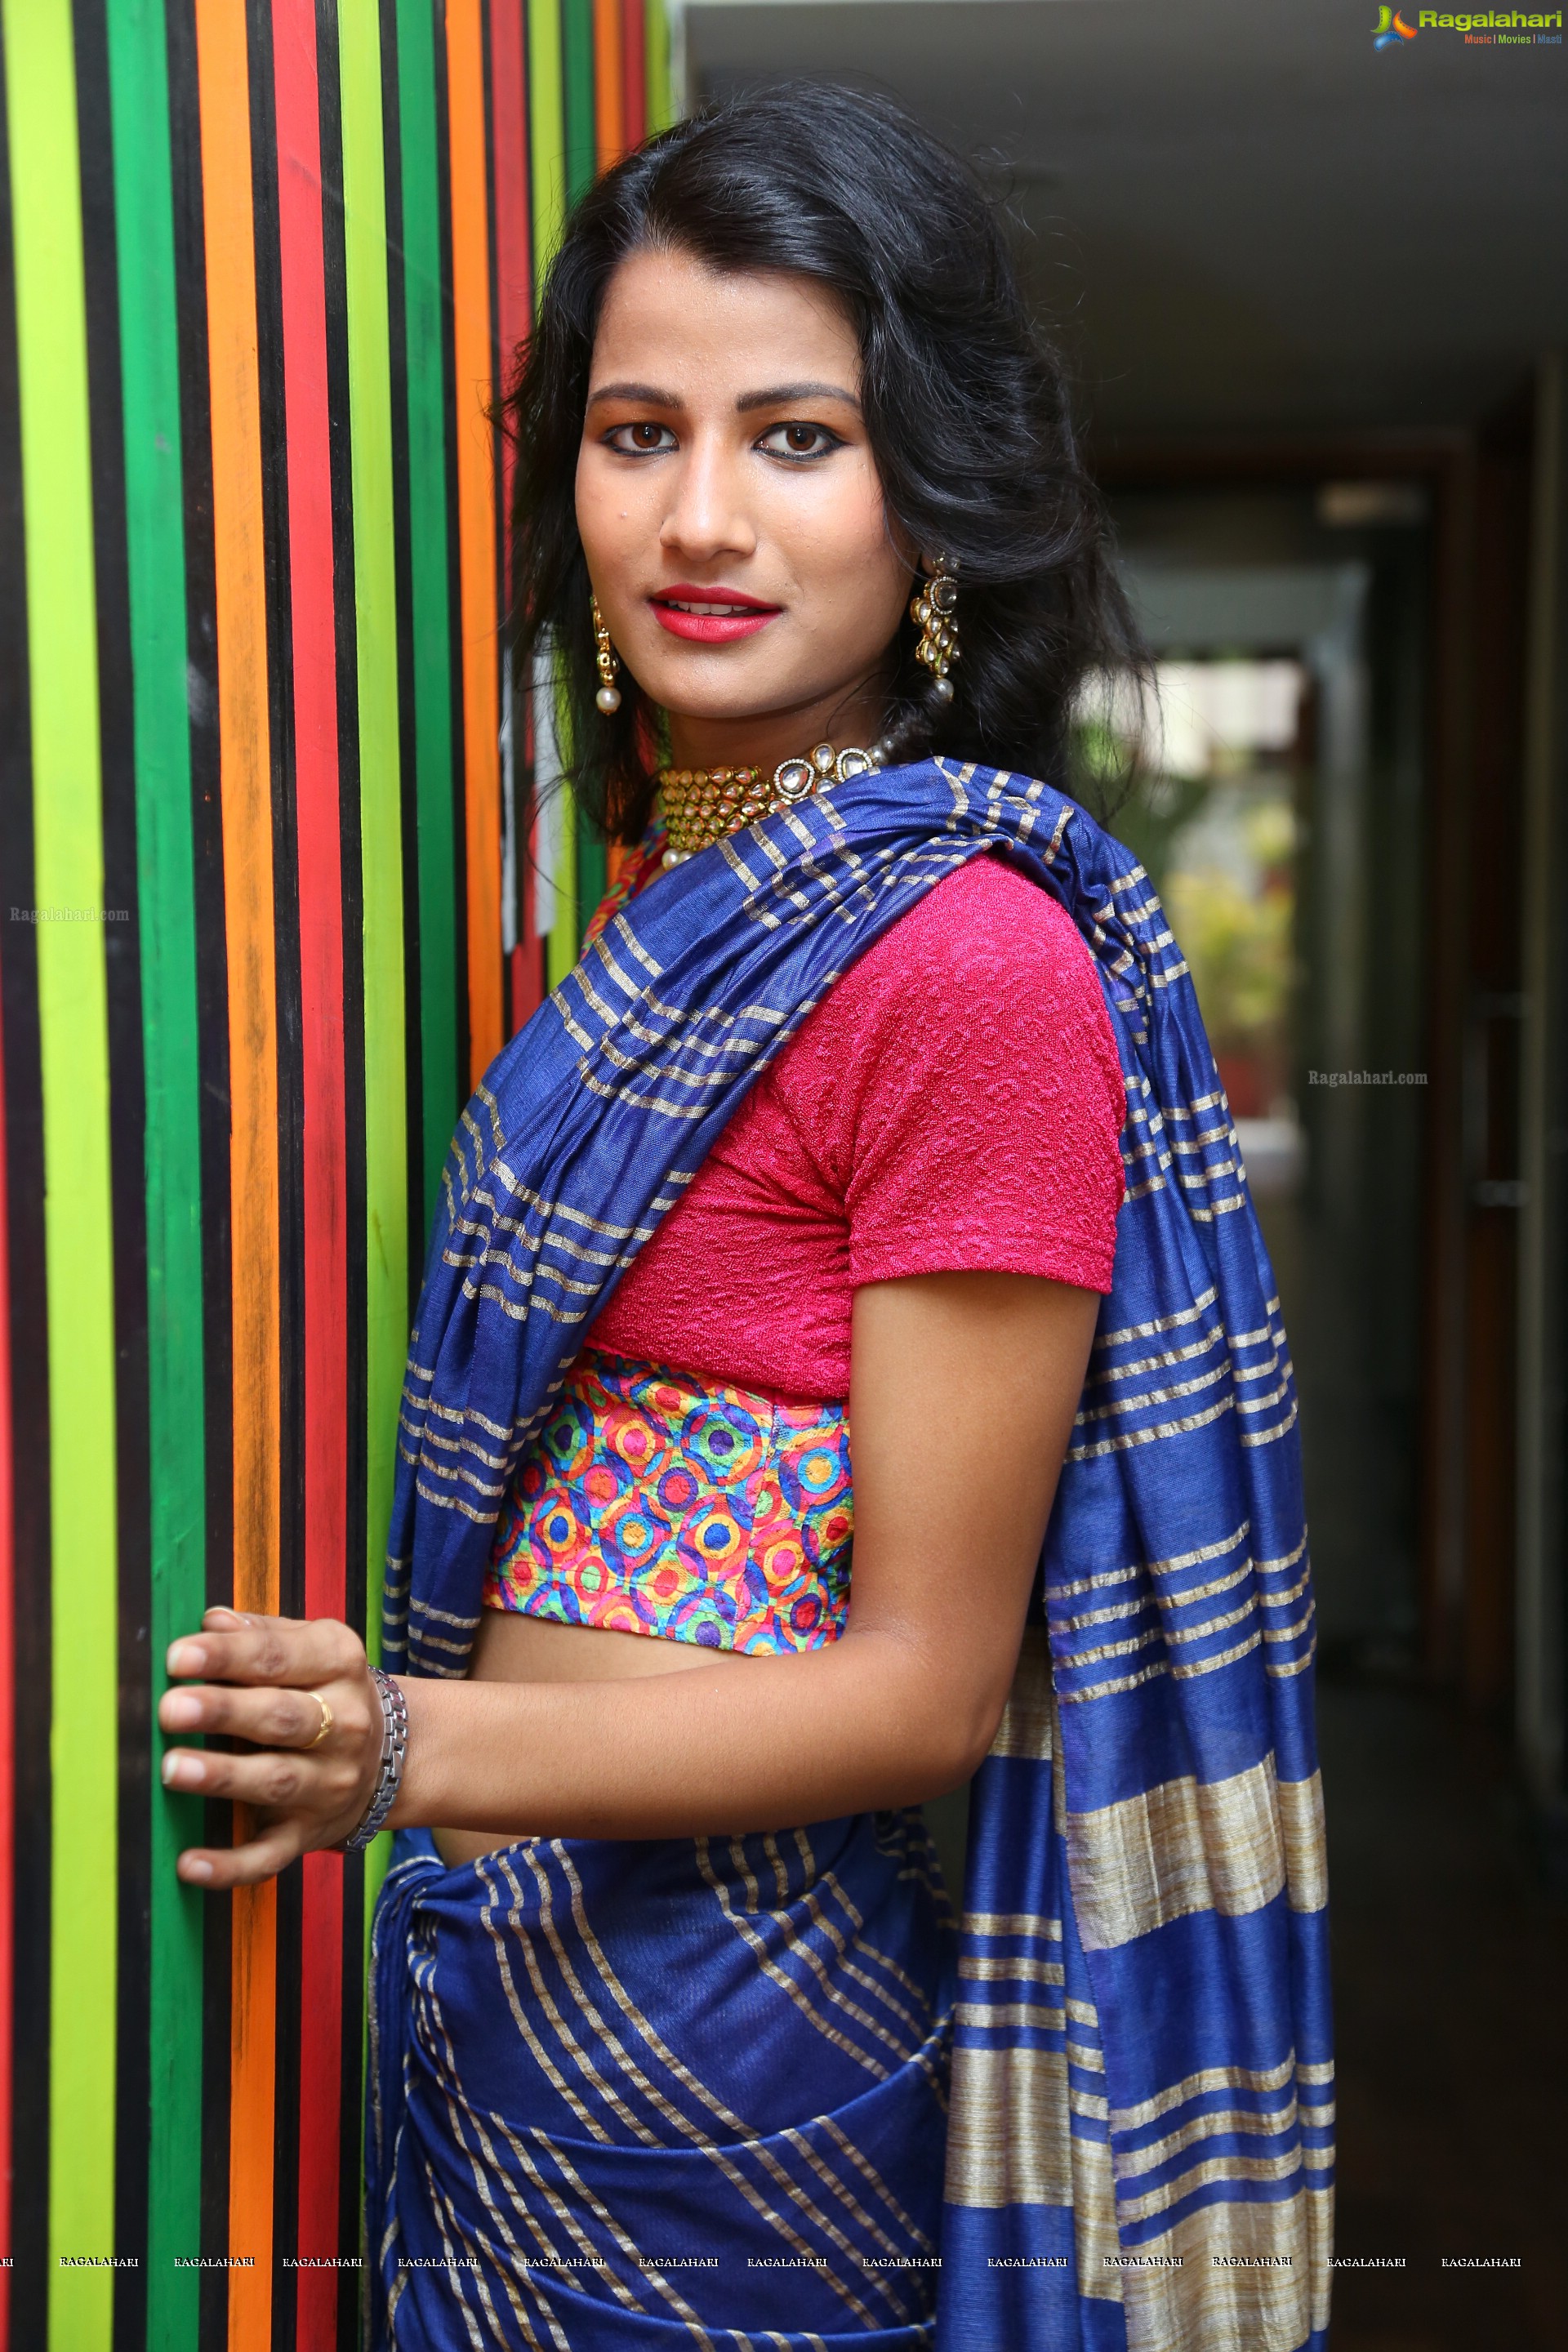 Amita Behara at Kala Silk Expo Curtain Raiser (High Definition)